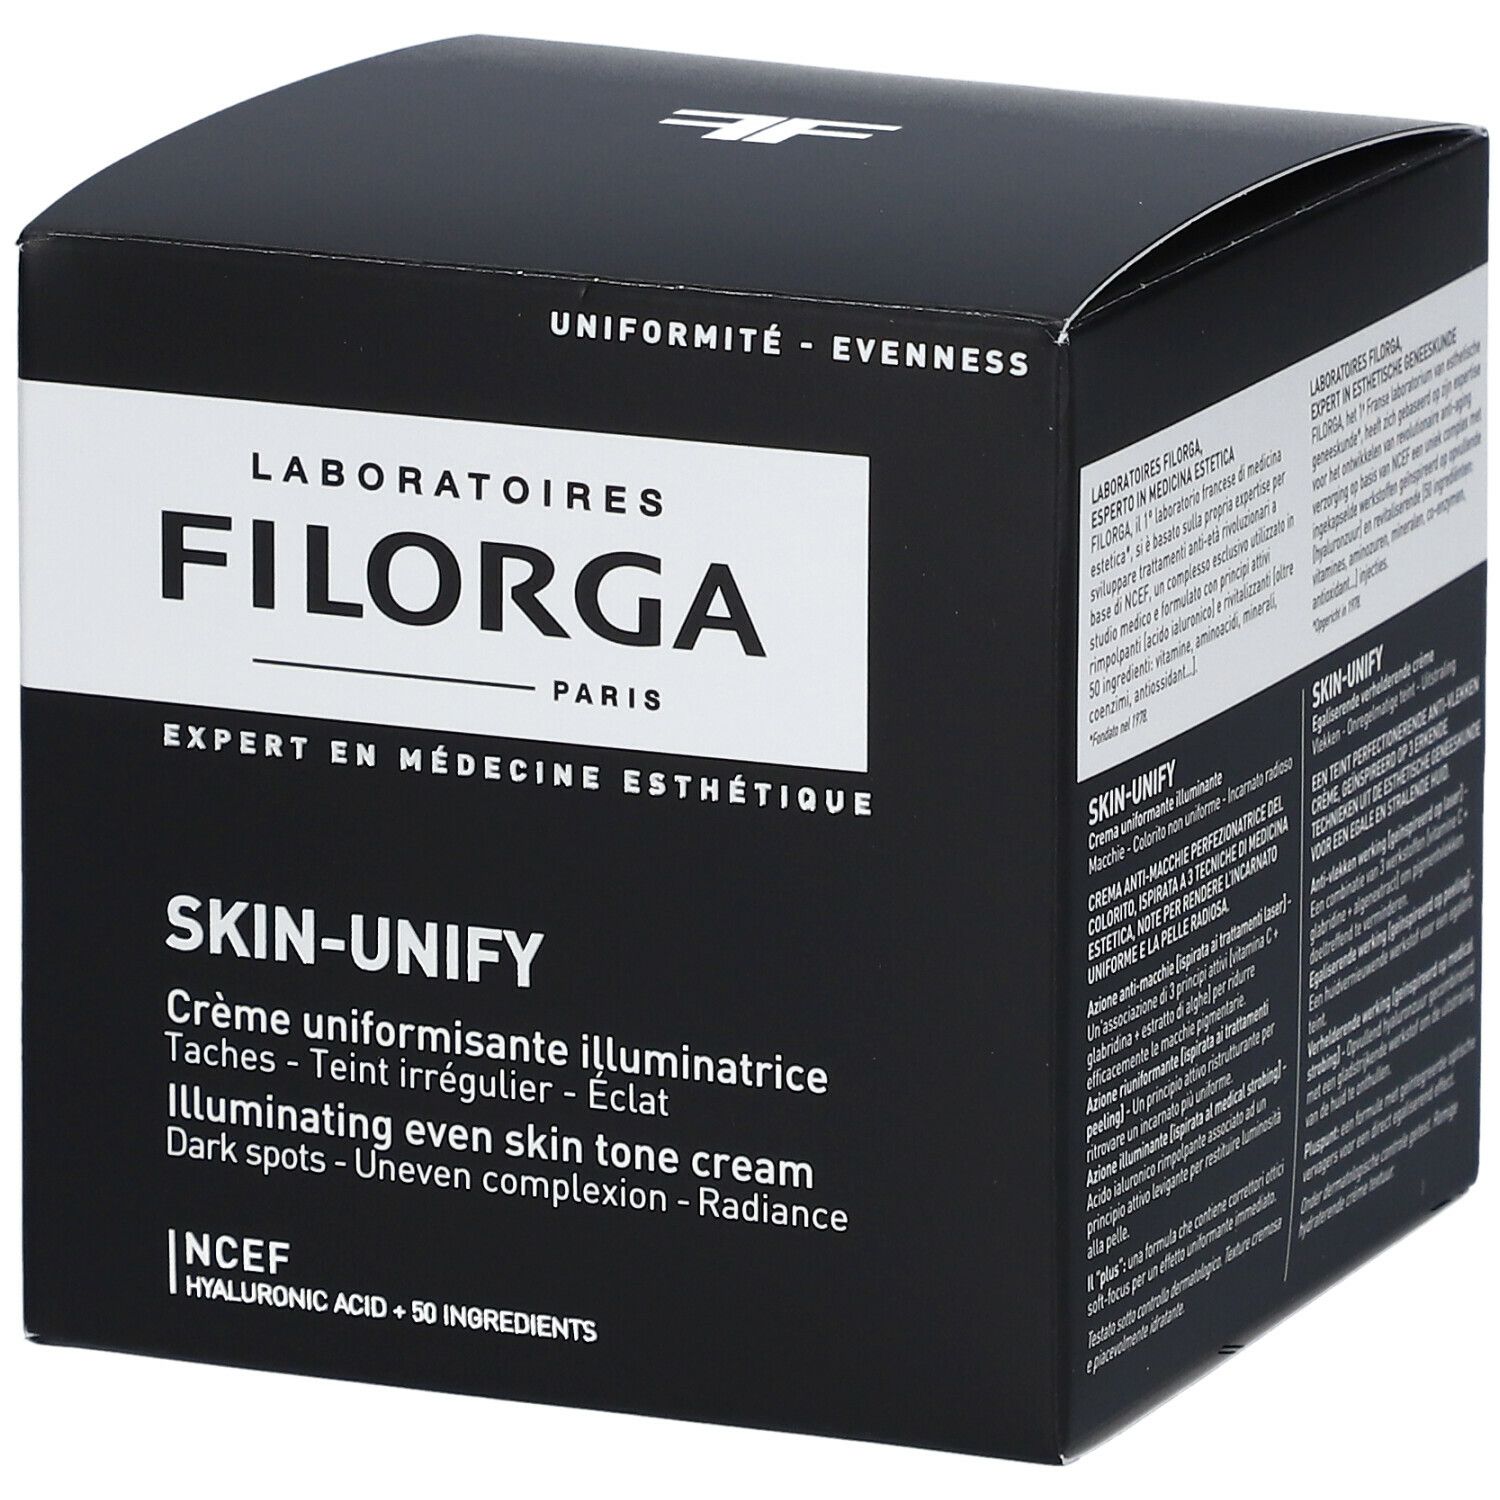 Laboratoires Filorga Skin-Unify Crème uniformisante illuminatrice